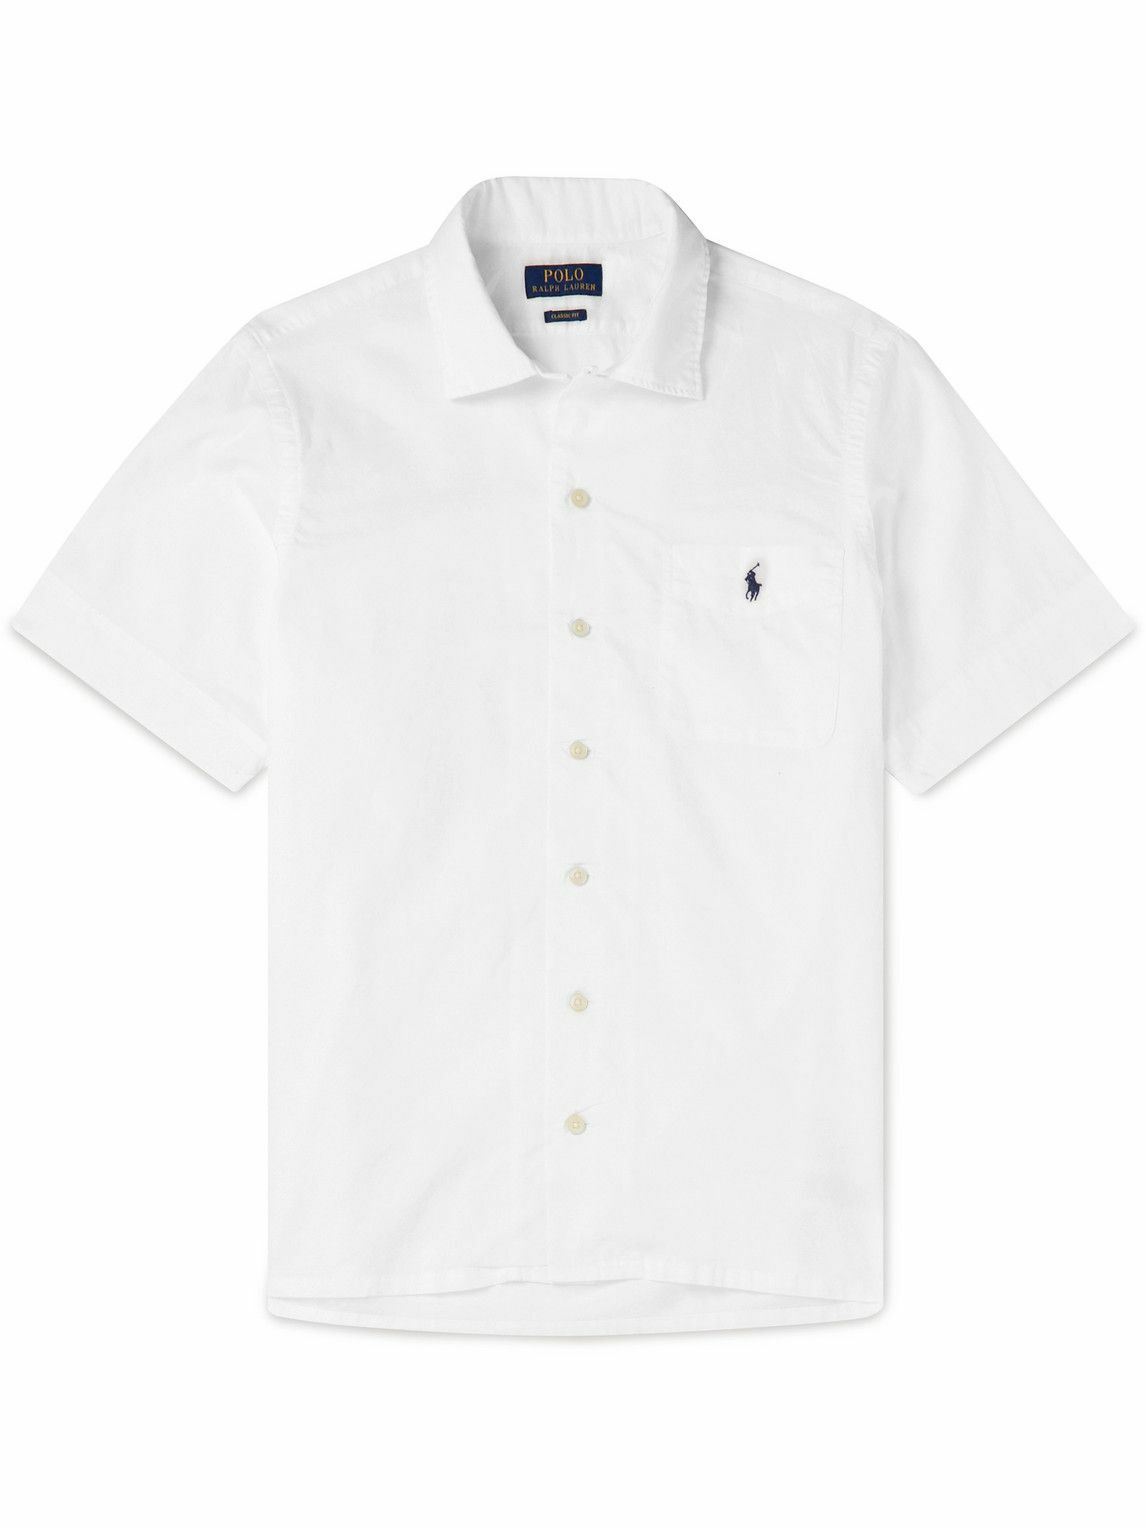 Polo Ralph Lauren - Logo-Embroidered Cotton-Poplin Shirt - White